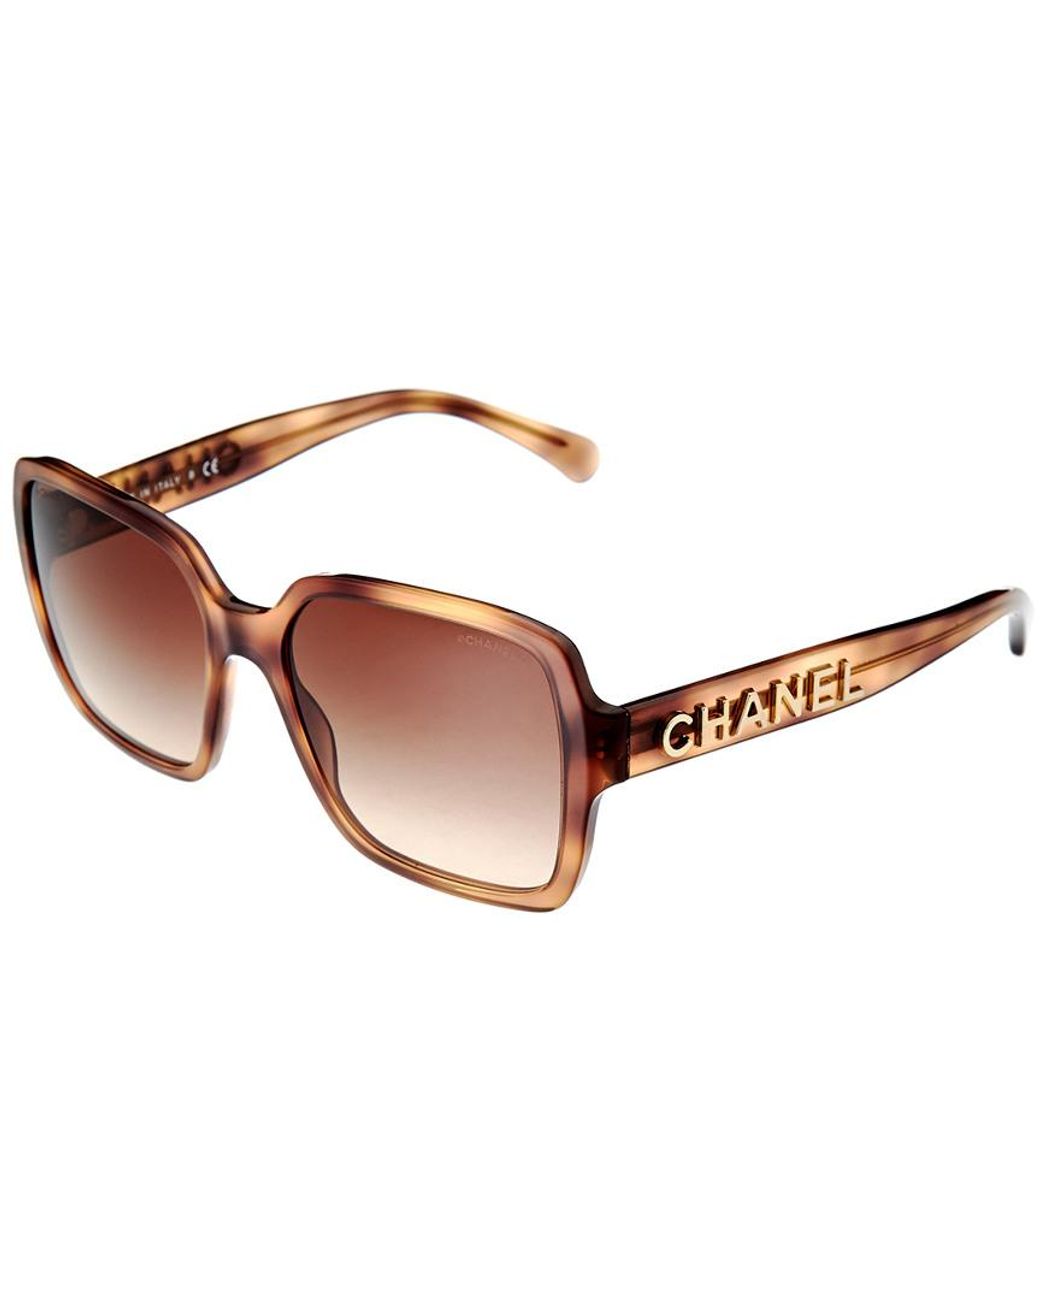 Chanel Women's Ch5408 56mm Sunglasses in Black